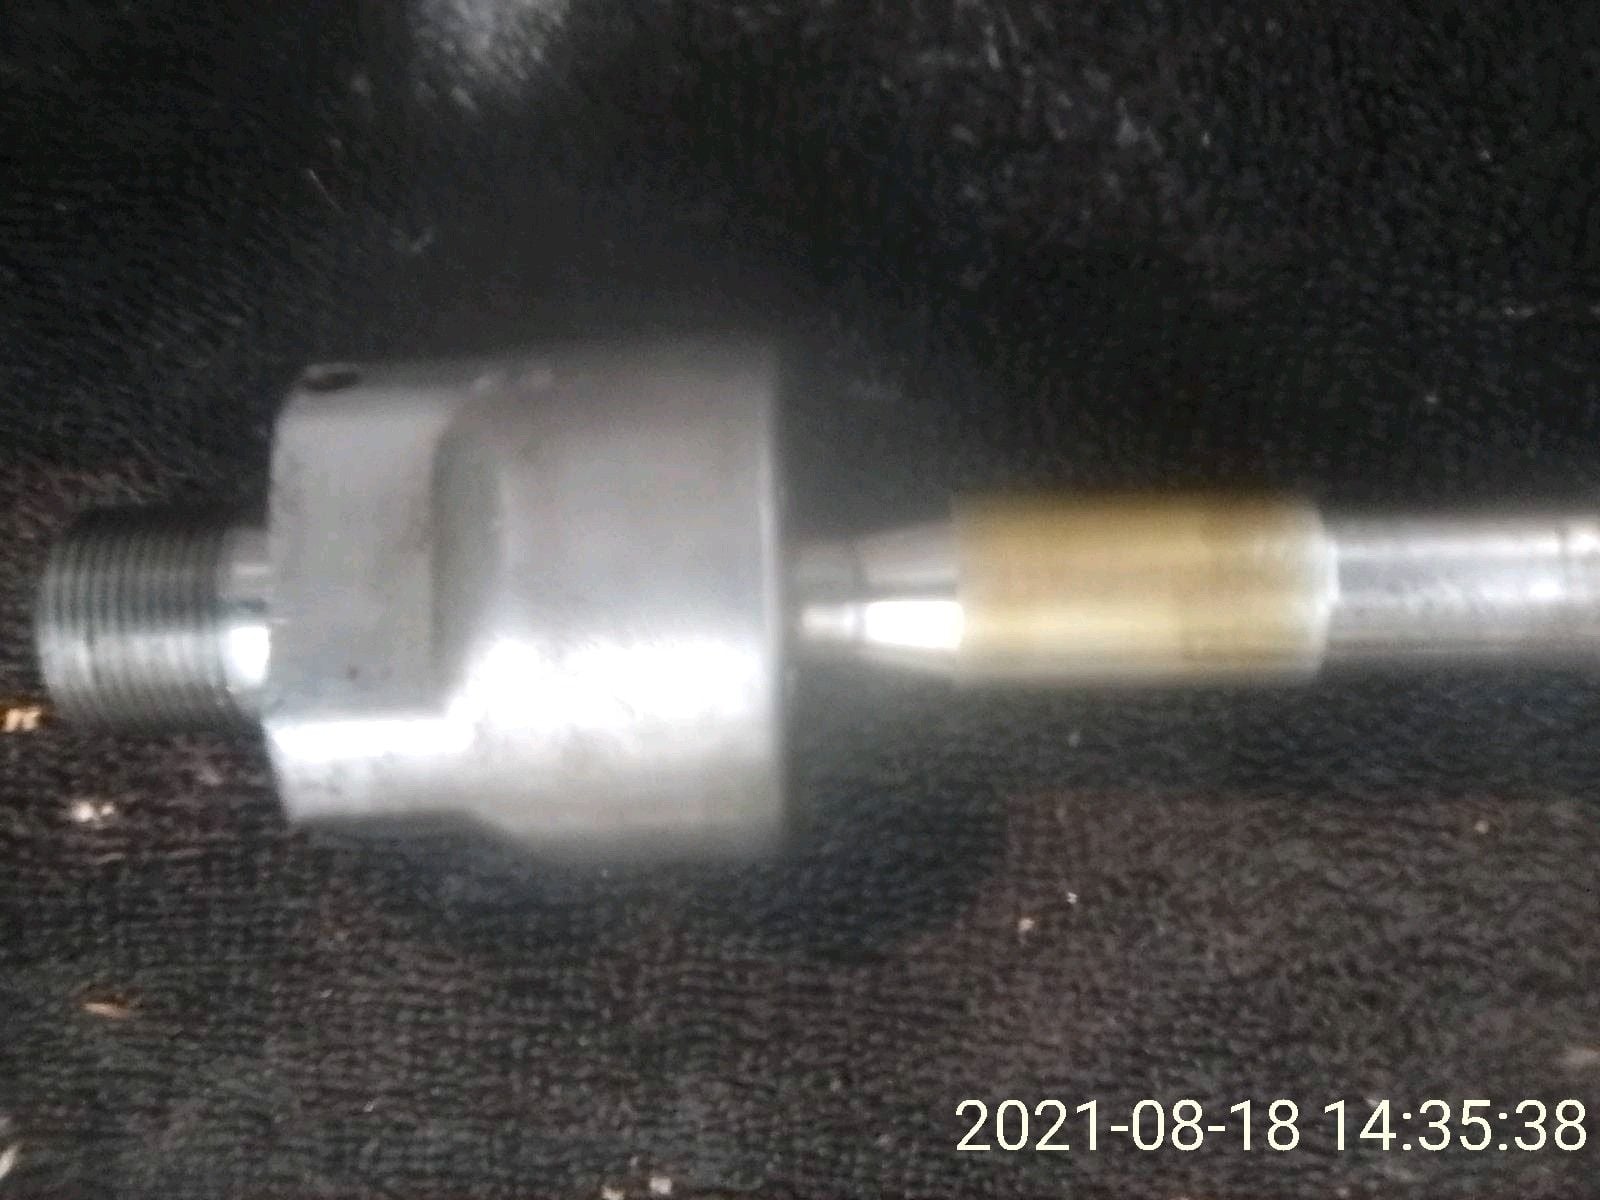 Steering/Suspension - FD - OEM Inner Tie Rod - New - 1993 to 2002 Mazda RX-7 - San Jose, CA 95121, United States